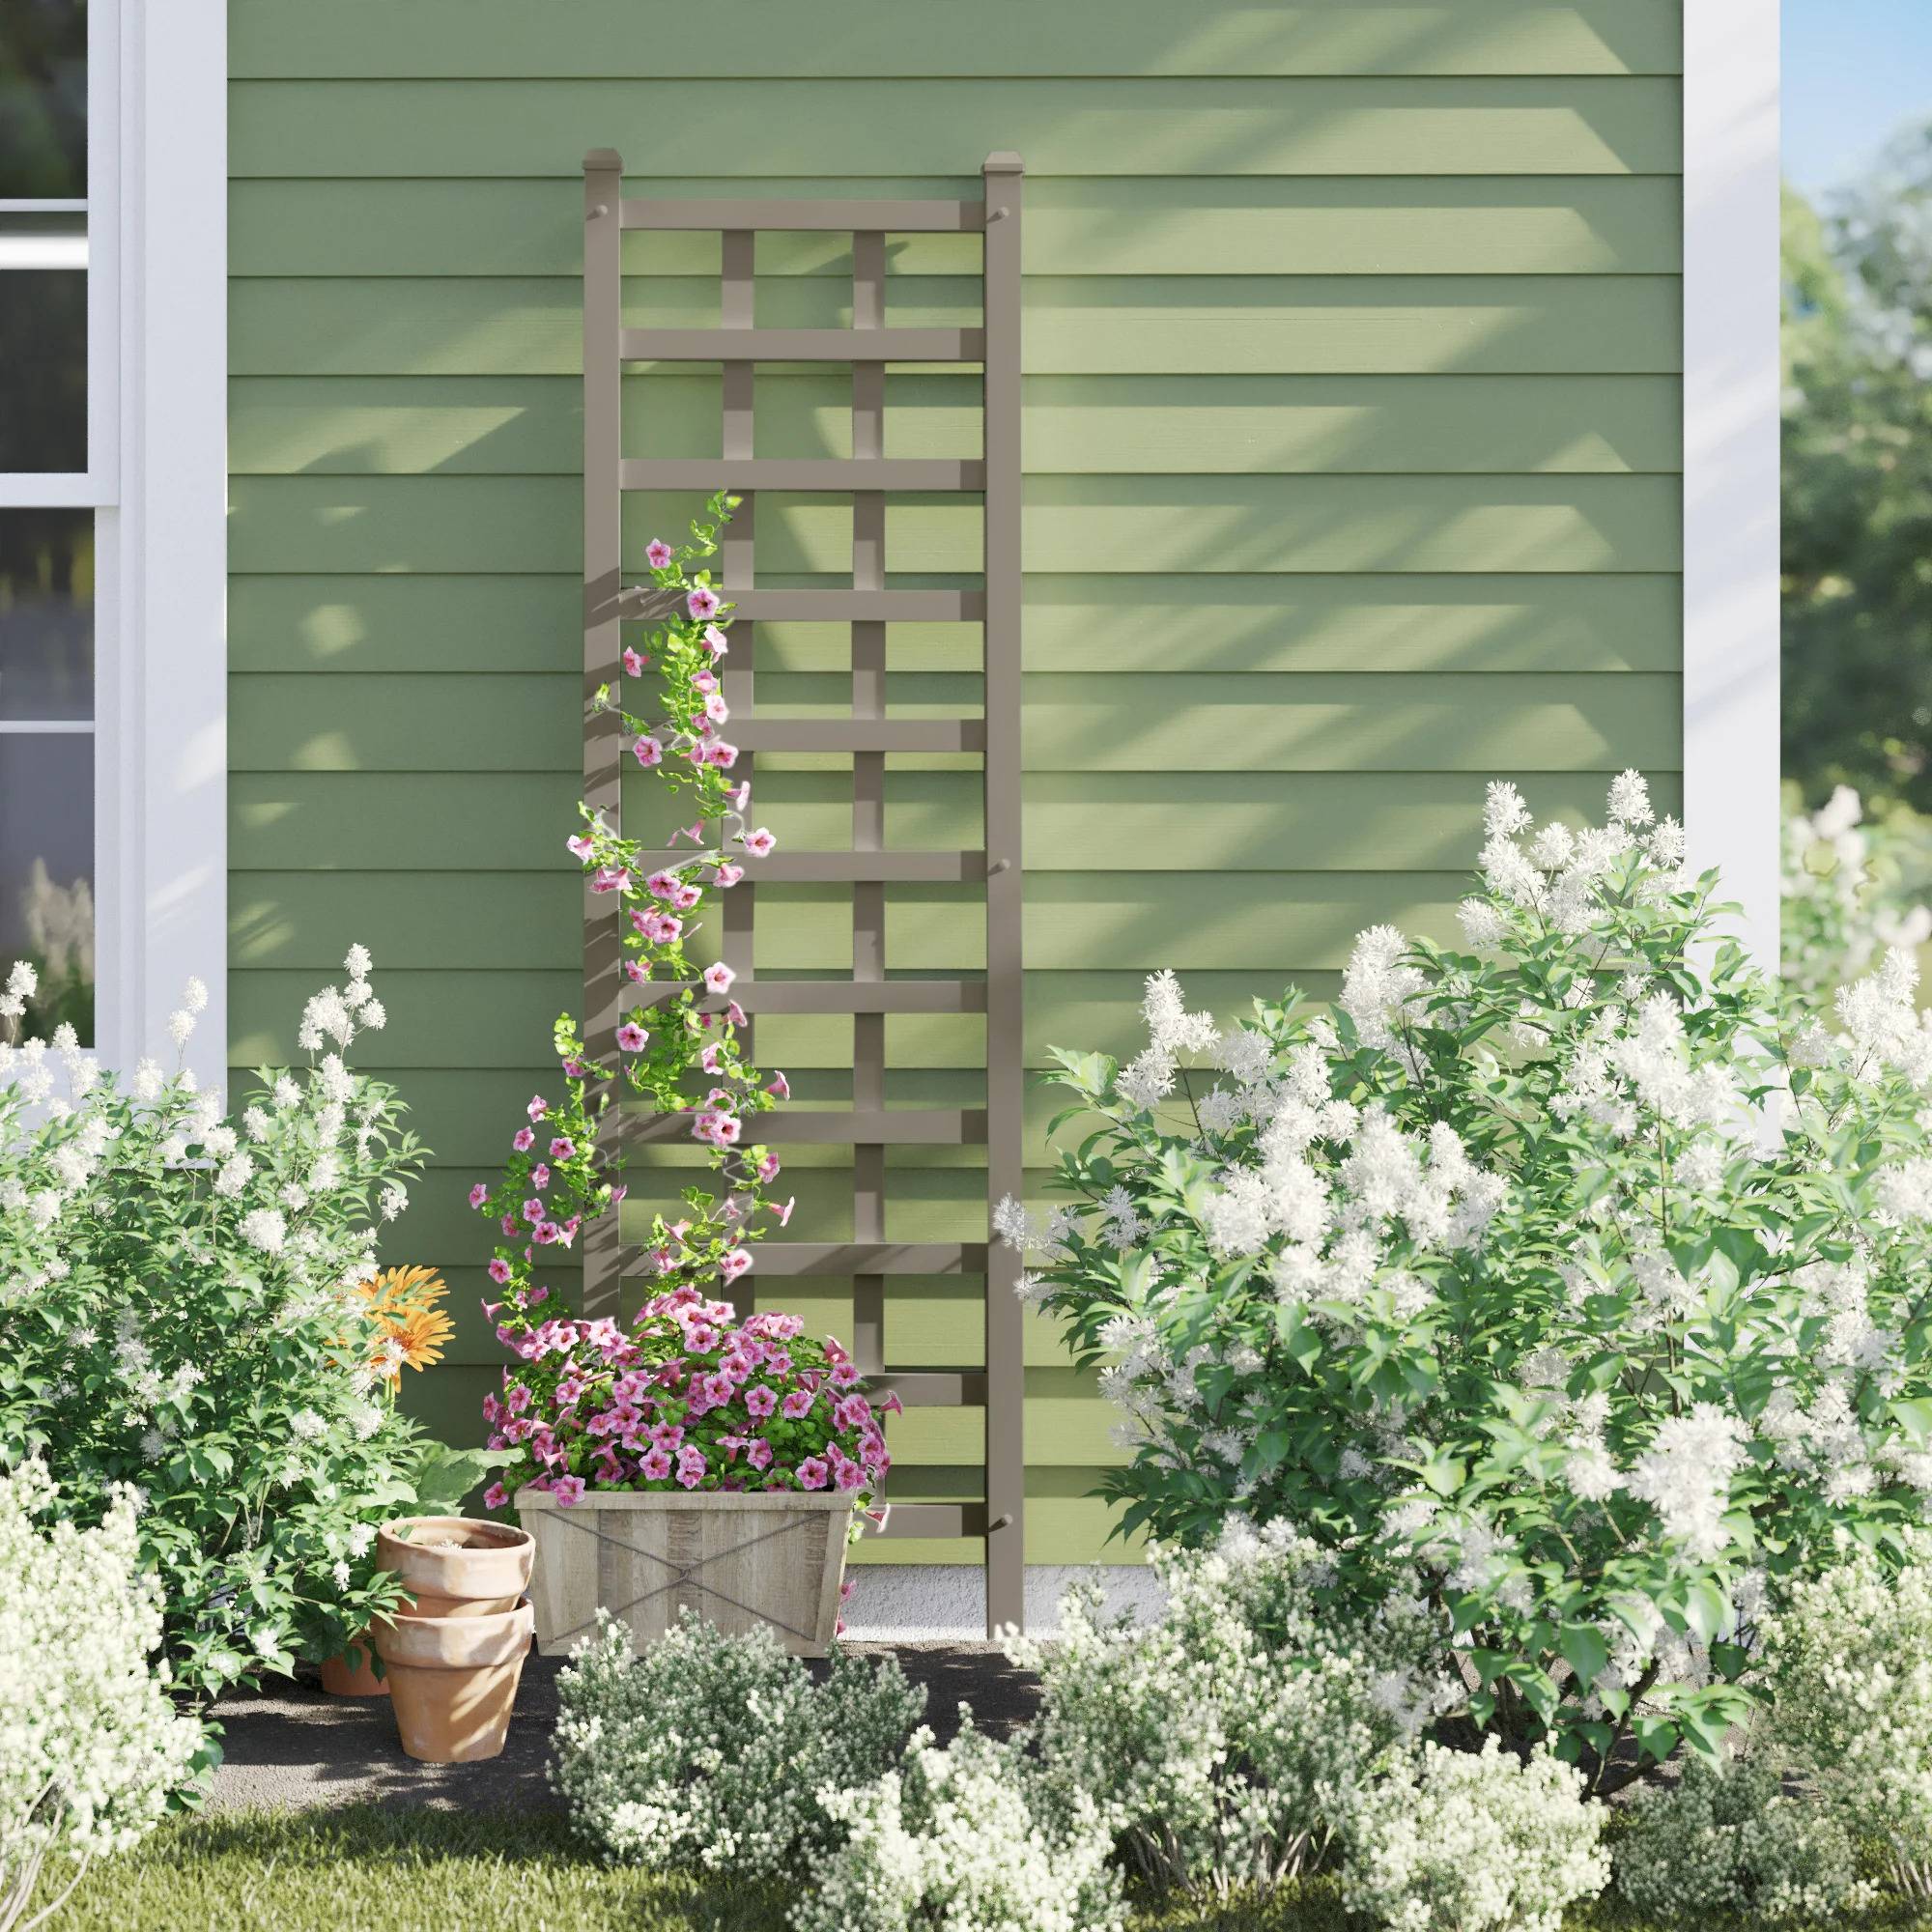 32 Wall Garden Planter Ideas For Vertical Gardening - 213